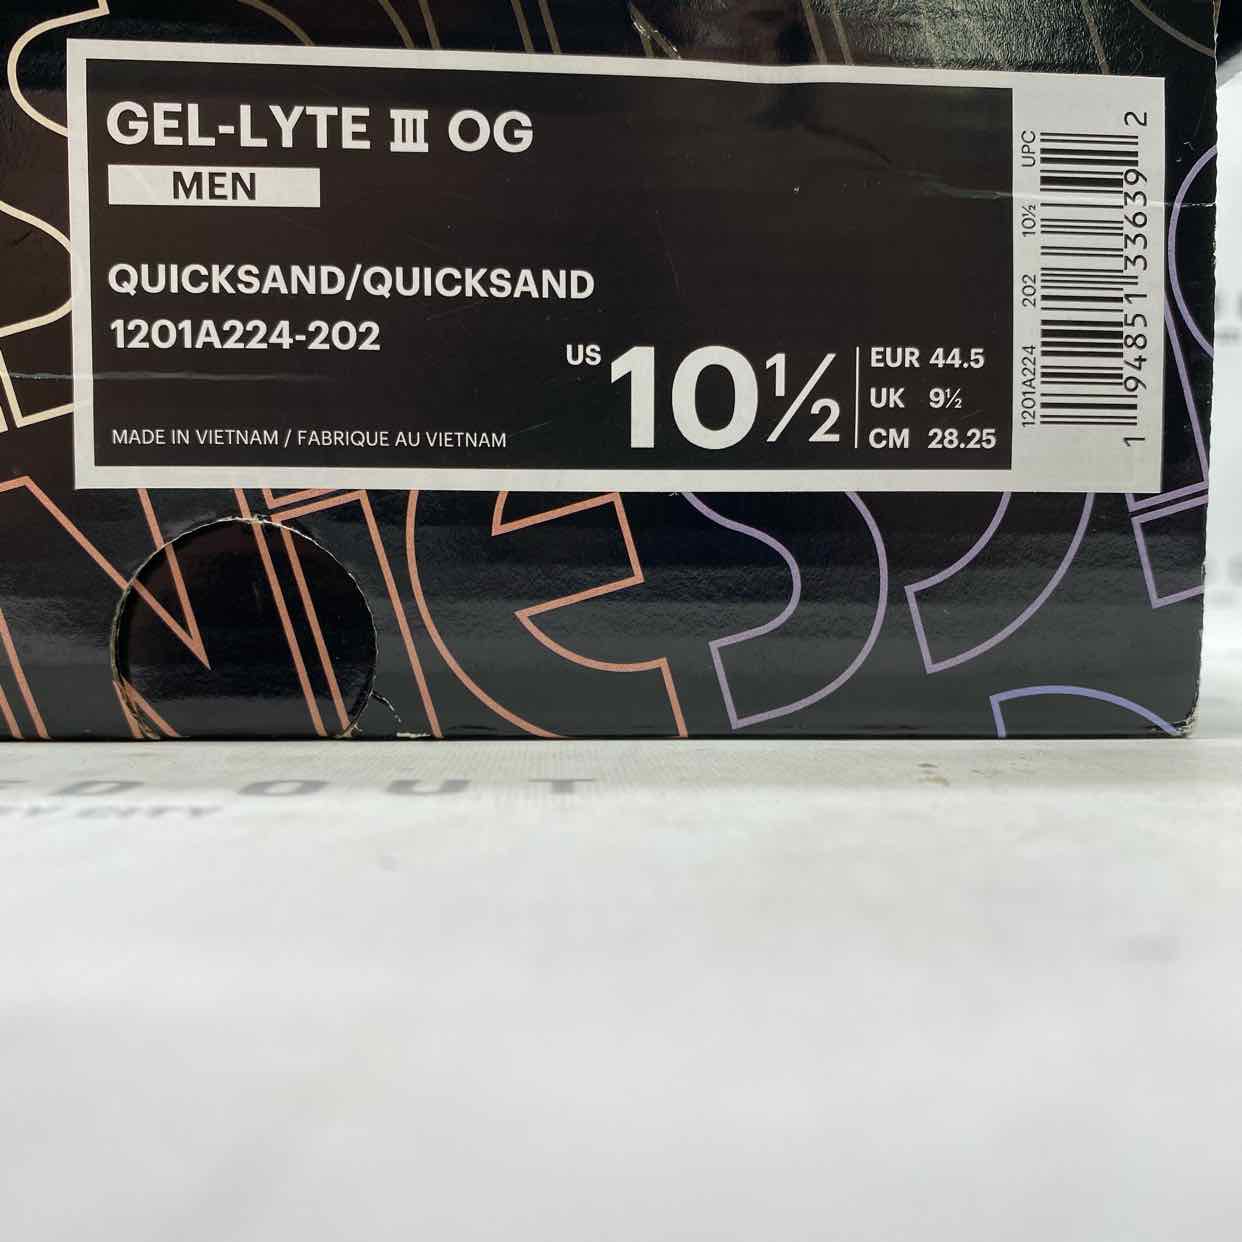 Asics Gel-Lyte 3 "Ronnie Fieg Quicksand" 2020 New Size 10.5